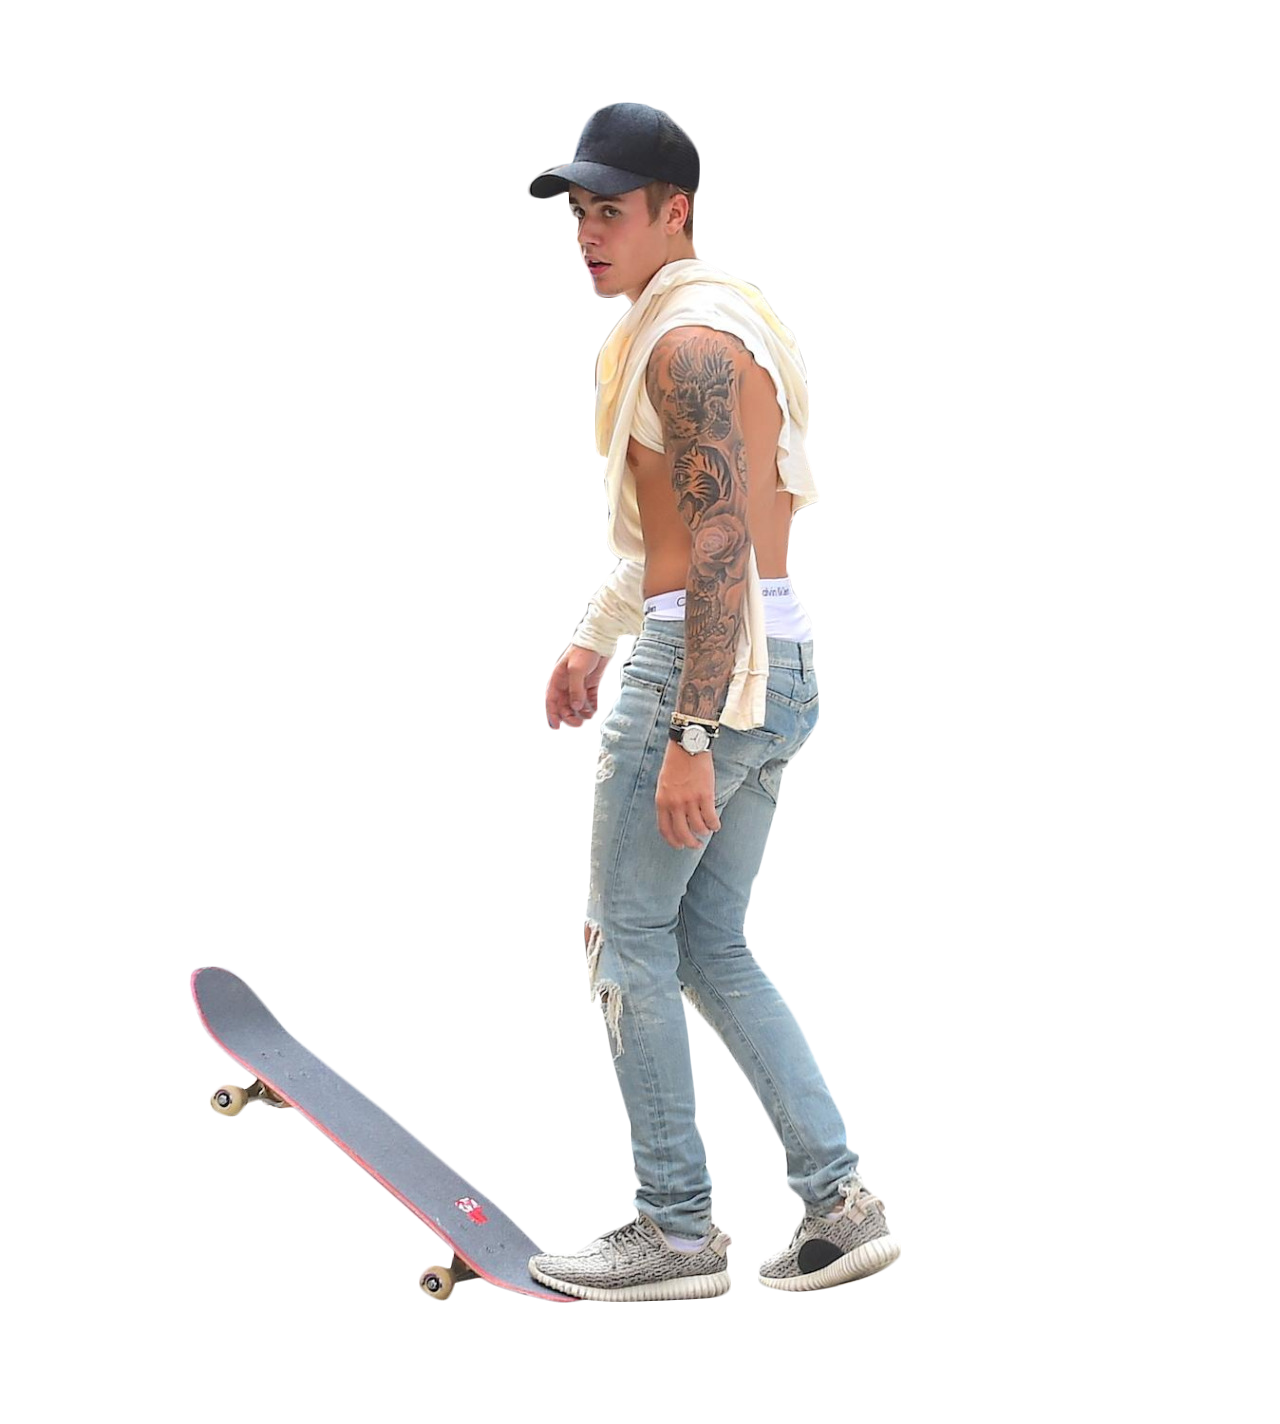 Justin Bieber Skateboarding